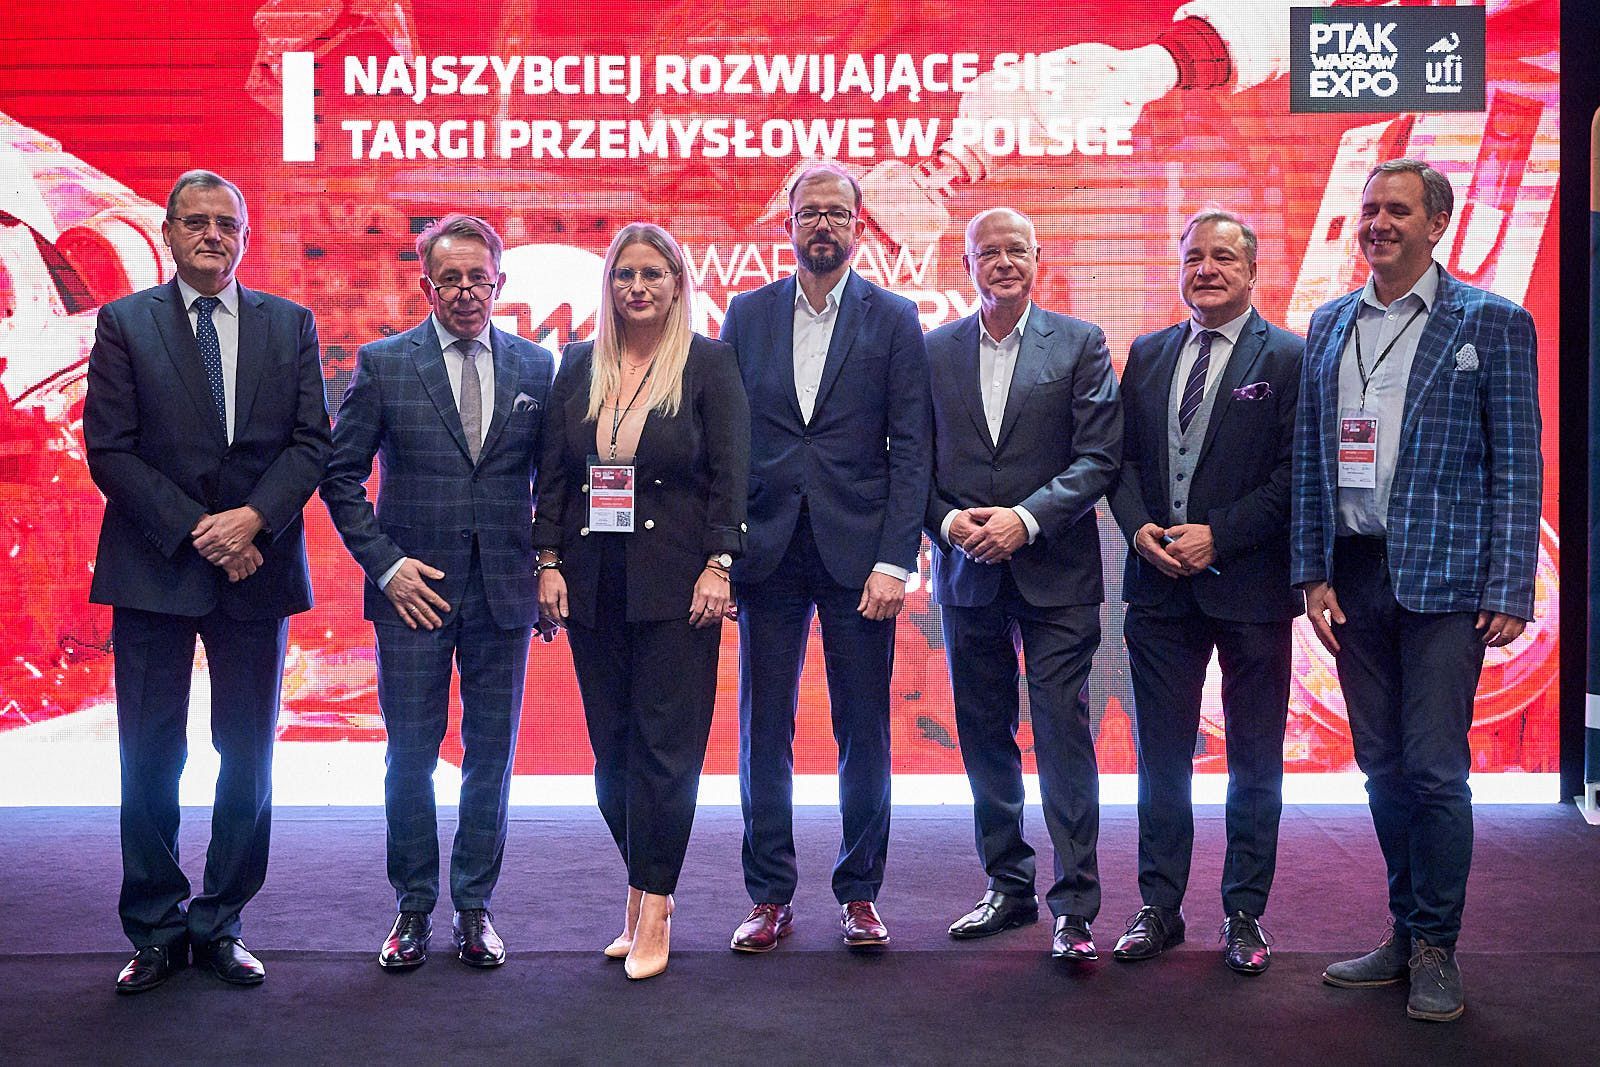 Podsumowanie Warsaw Industry Week 2022